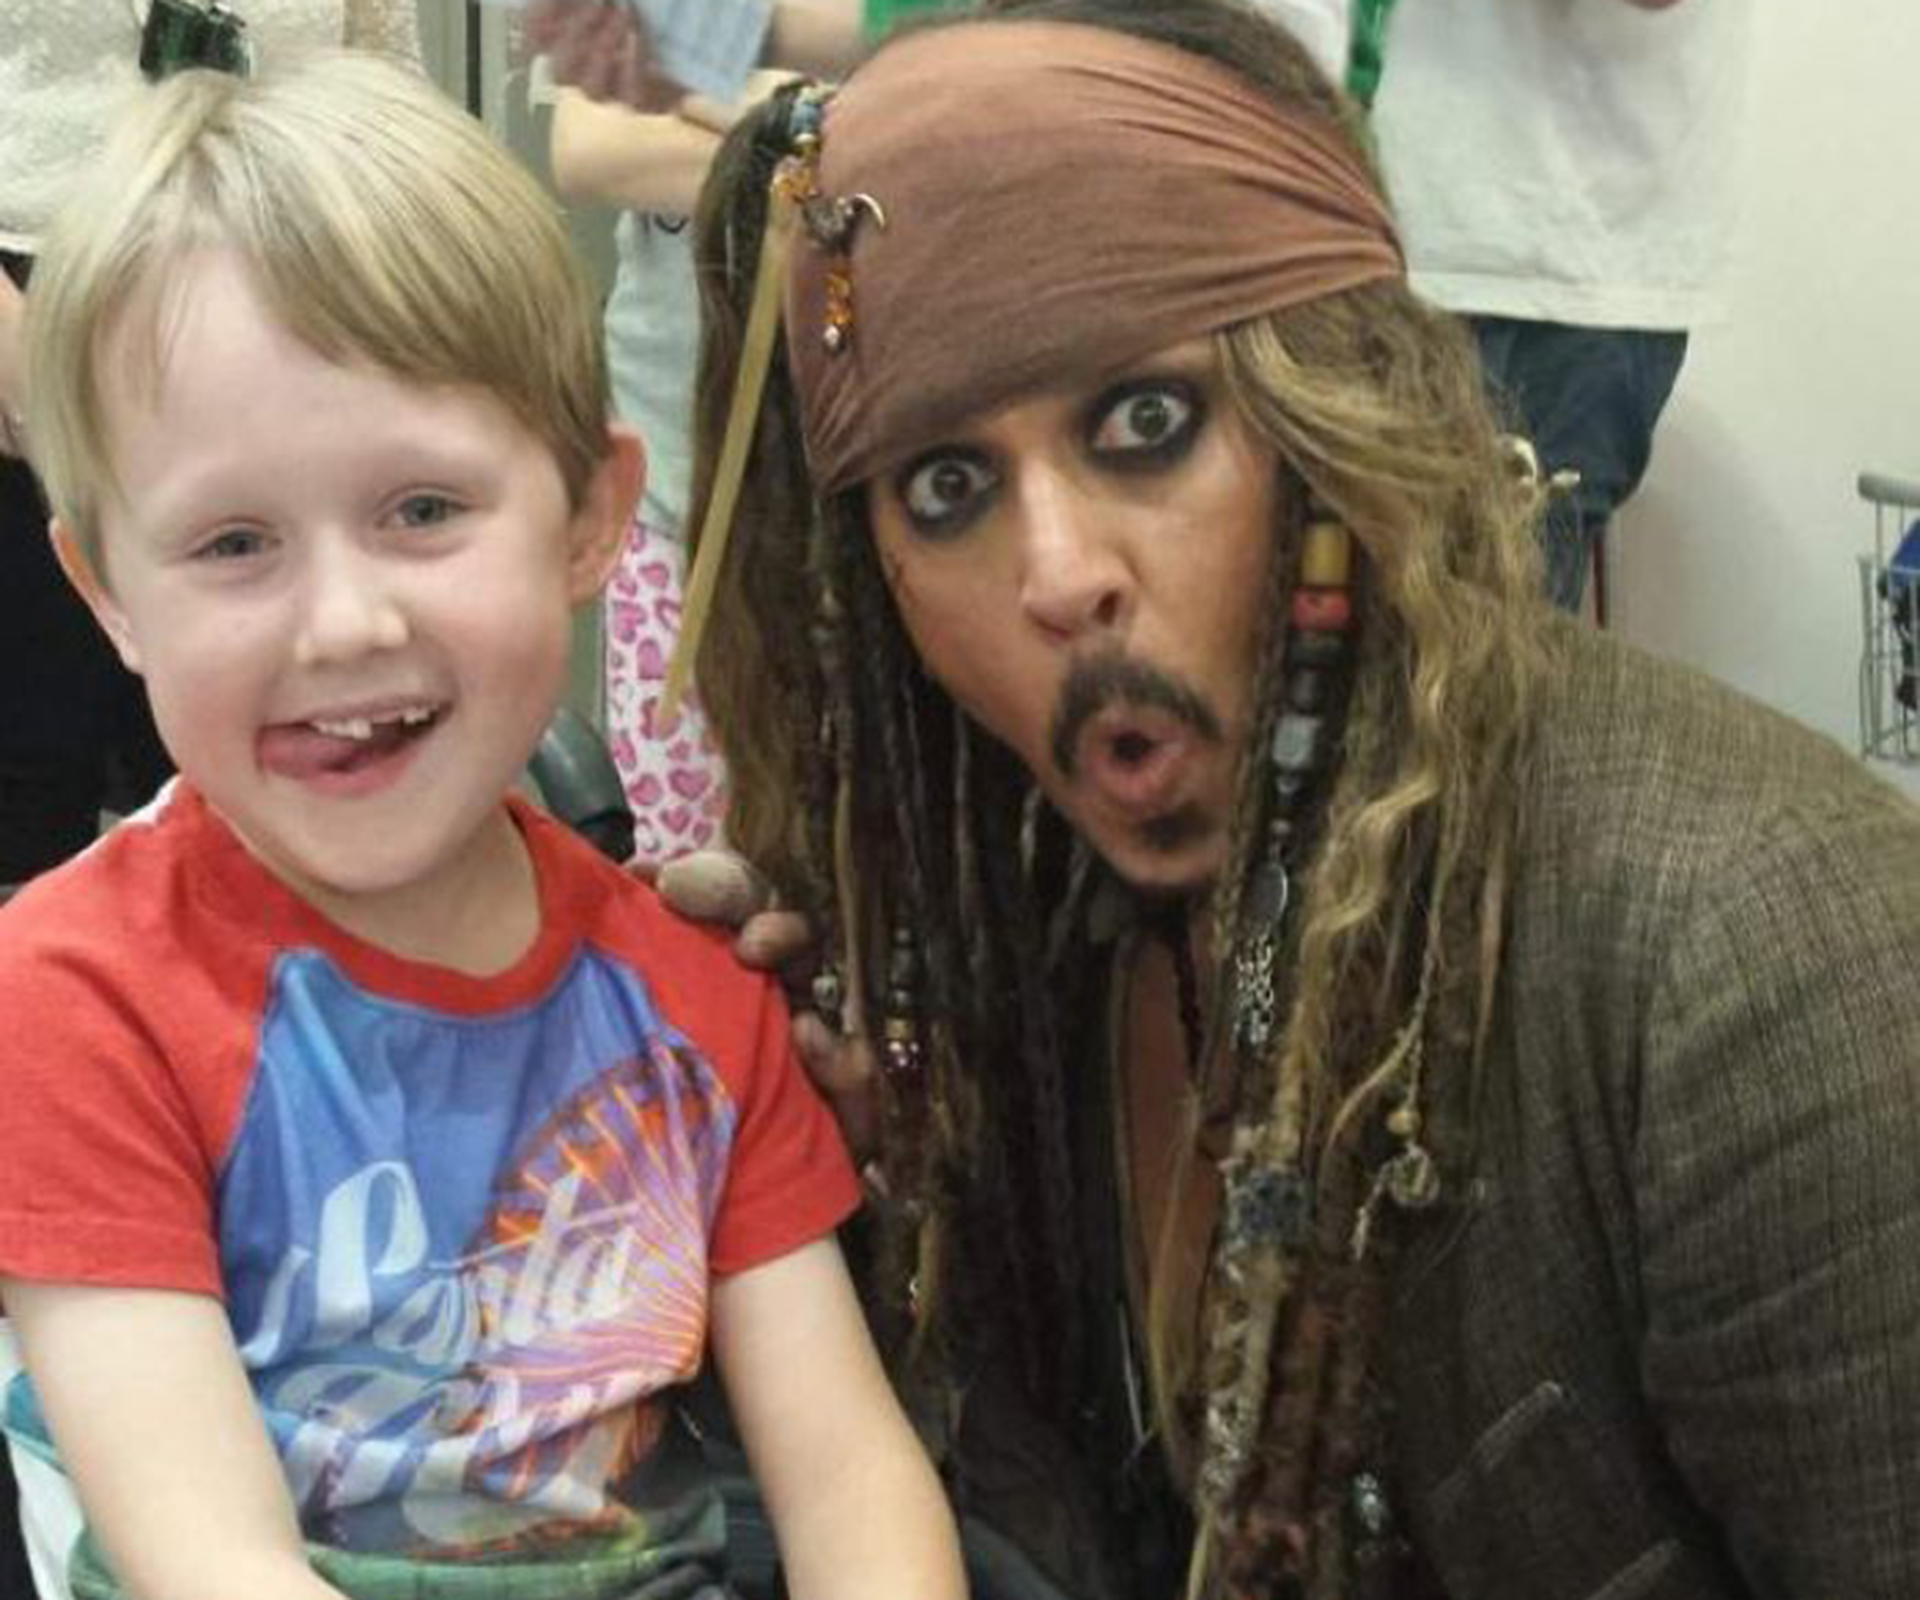 Johnny Depp leaves Pirates of the Caribbean set to visit children’s hospital in Brisbane